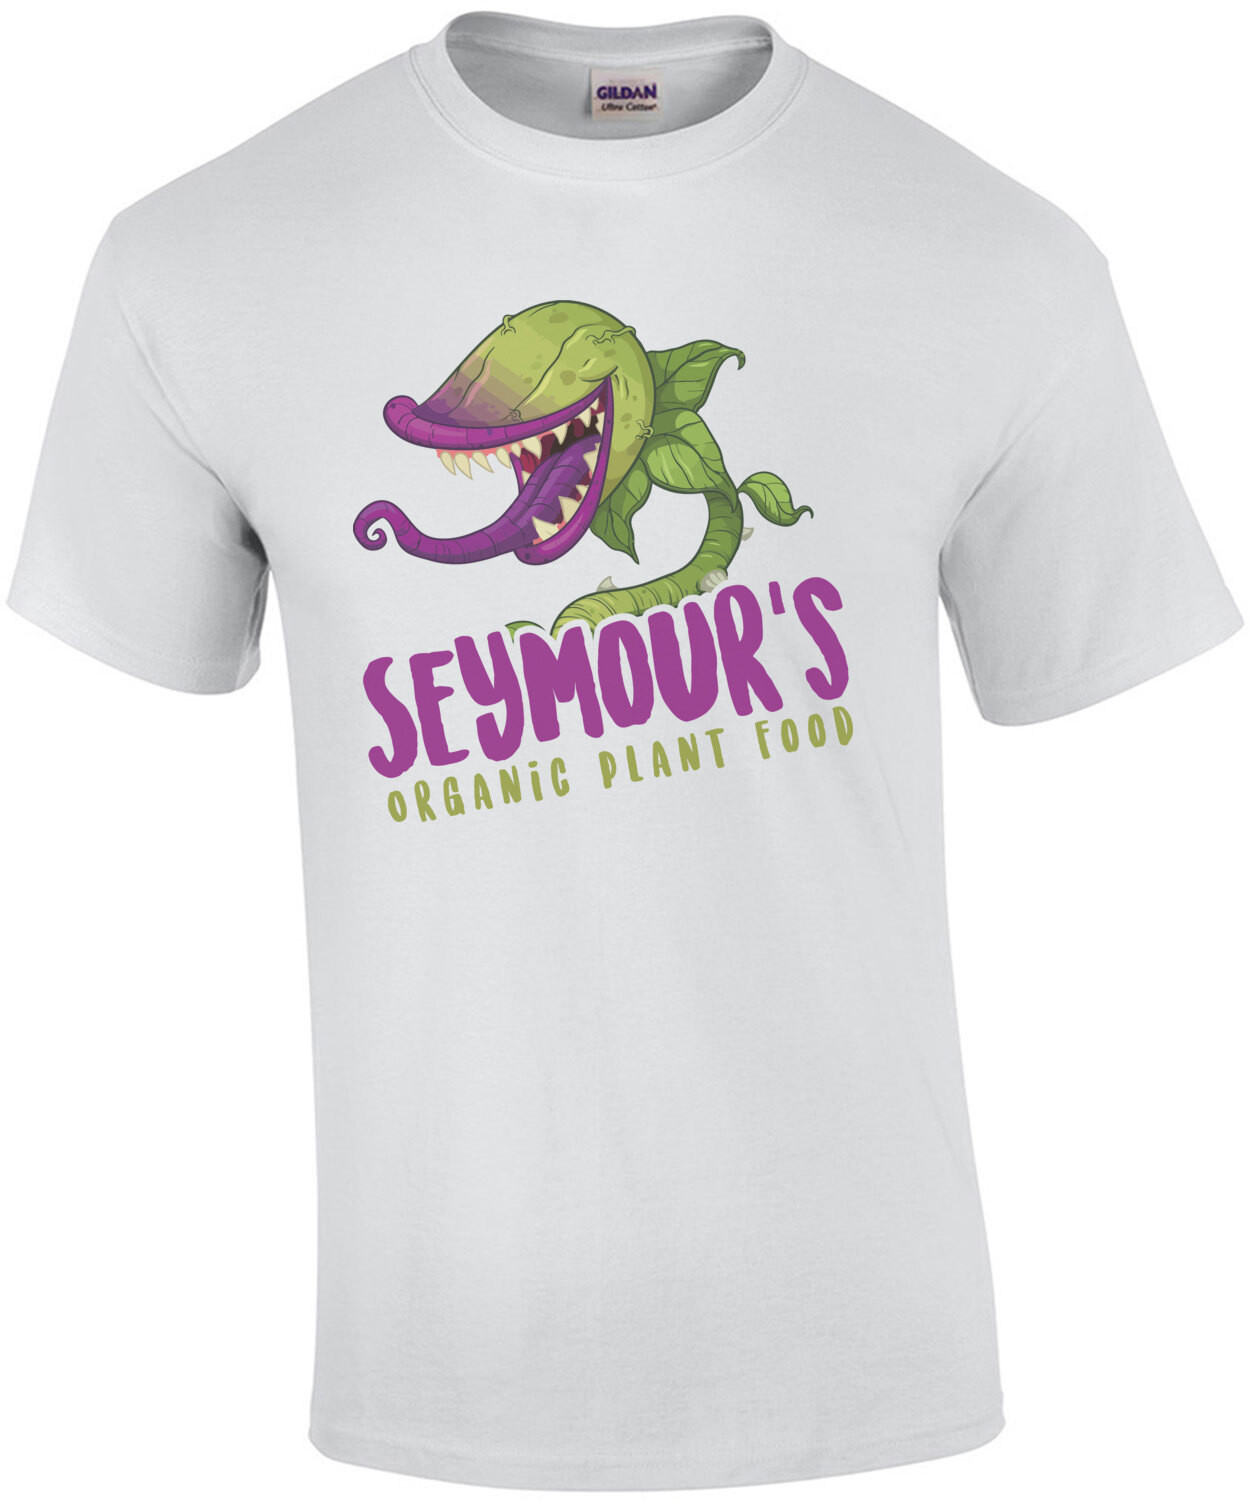 Seymour's Organic Plant Food - Little Shop Of Horrors 80's T-Shirt